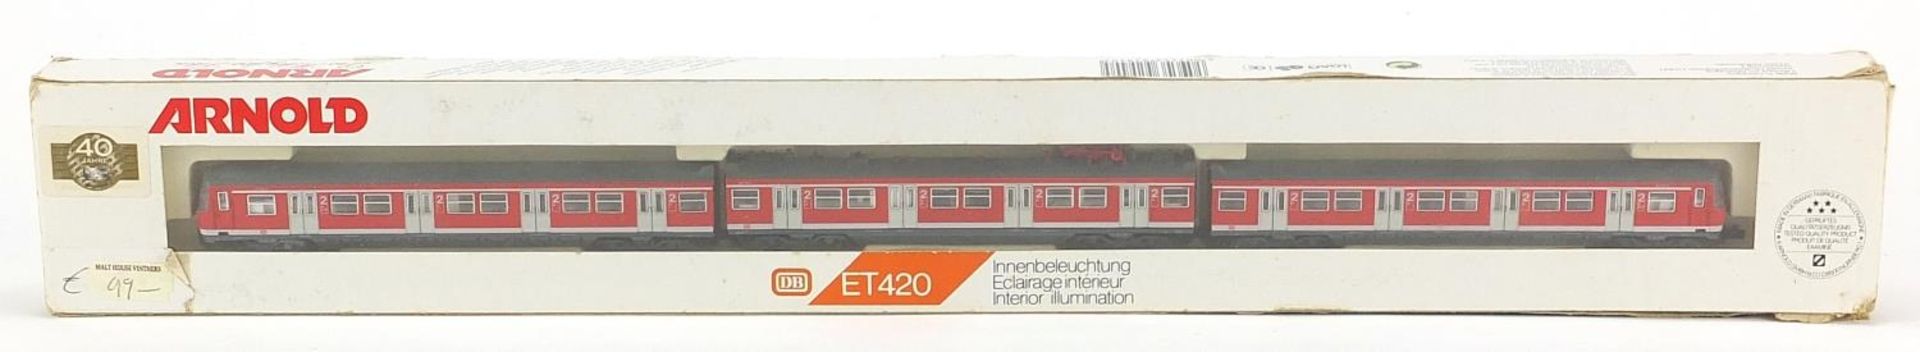 Arnold ET420 N gauge model railway three car set with box, number 2944